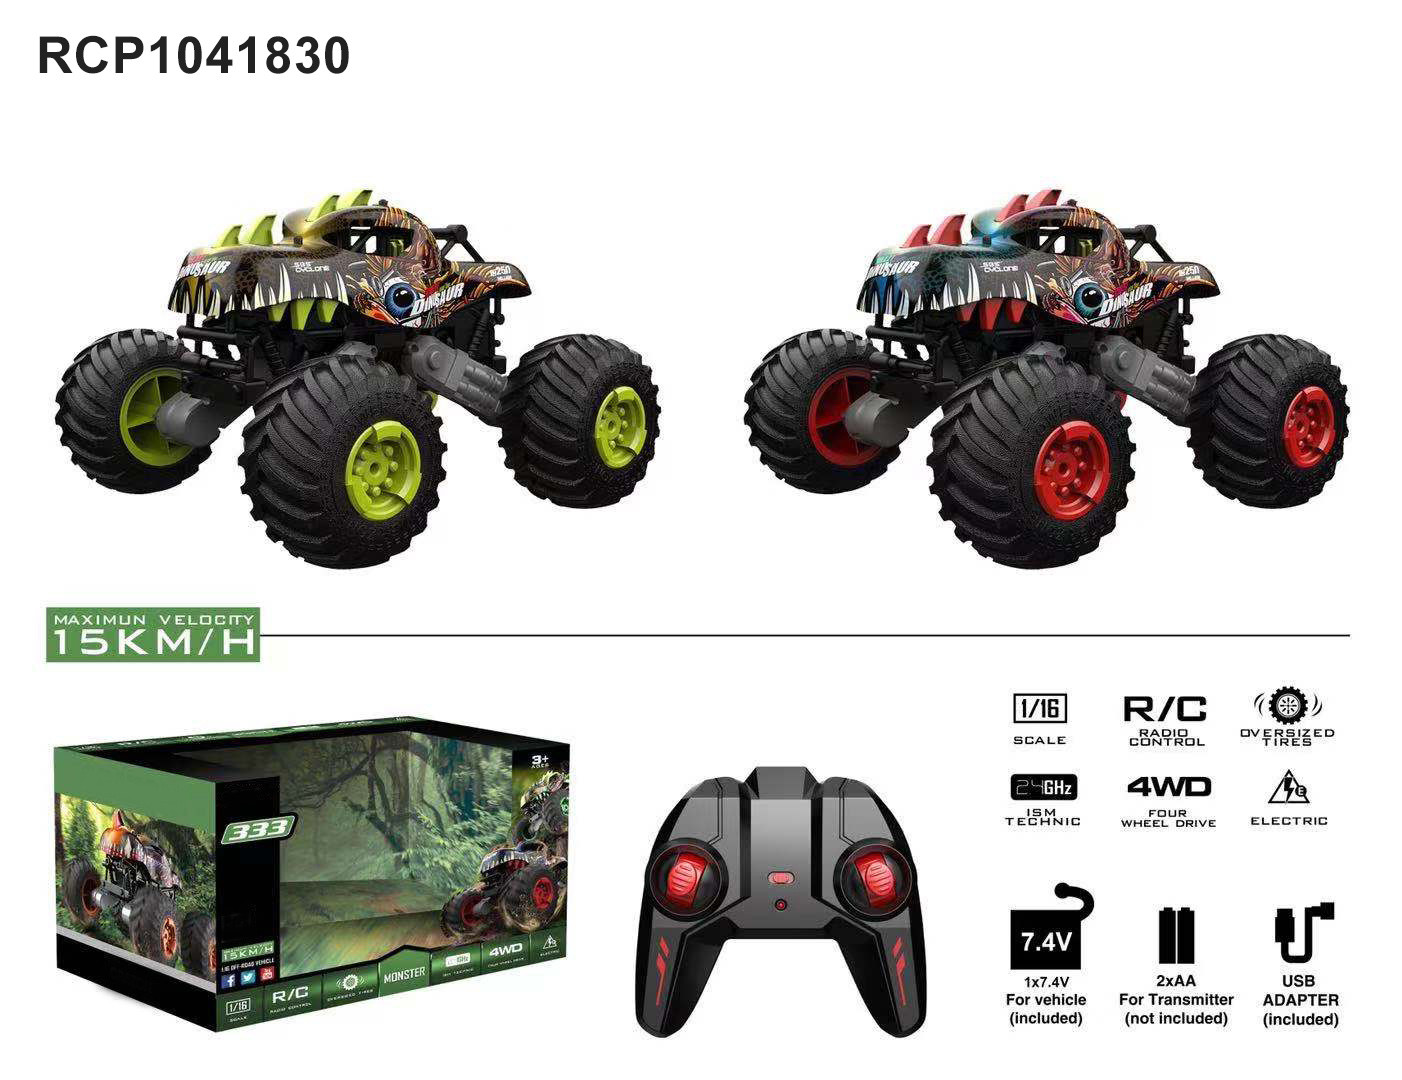 PAK TAT monster truck rc toys manufacturers